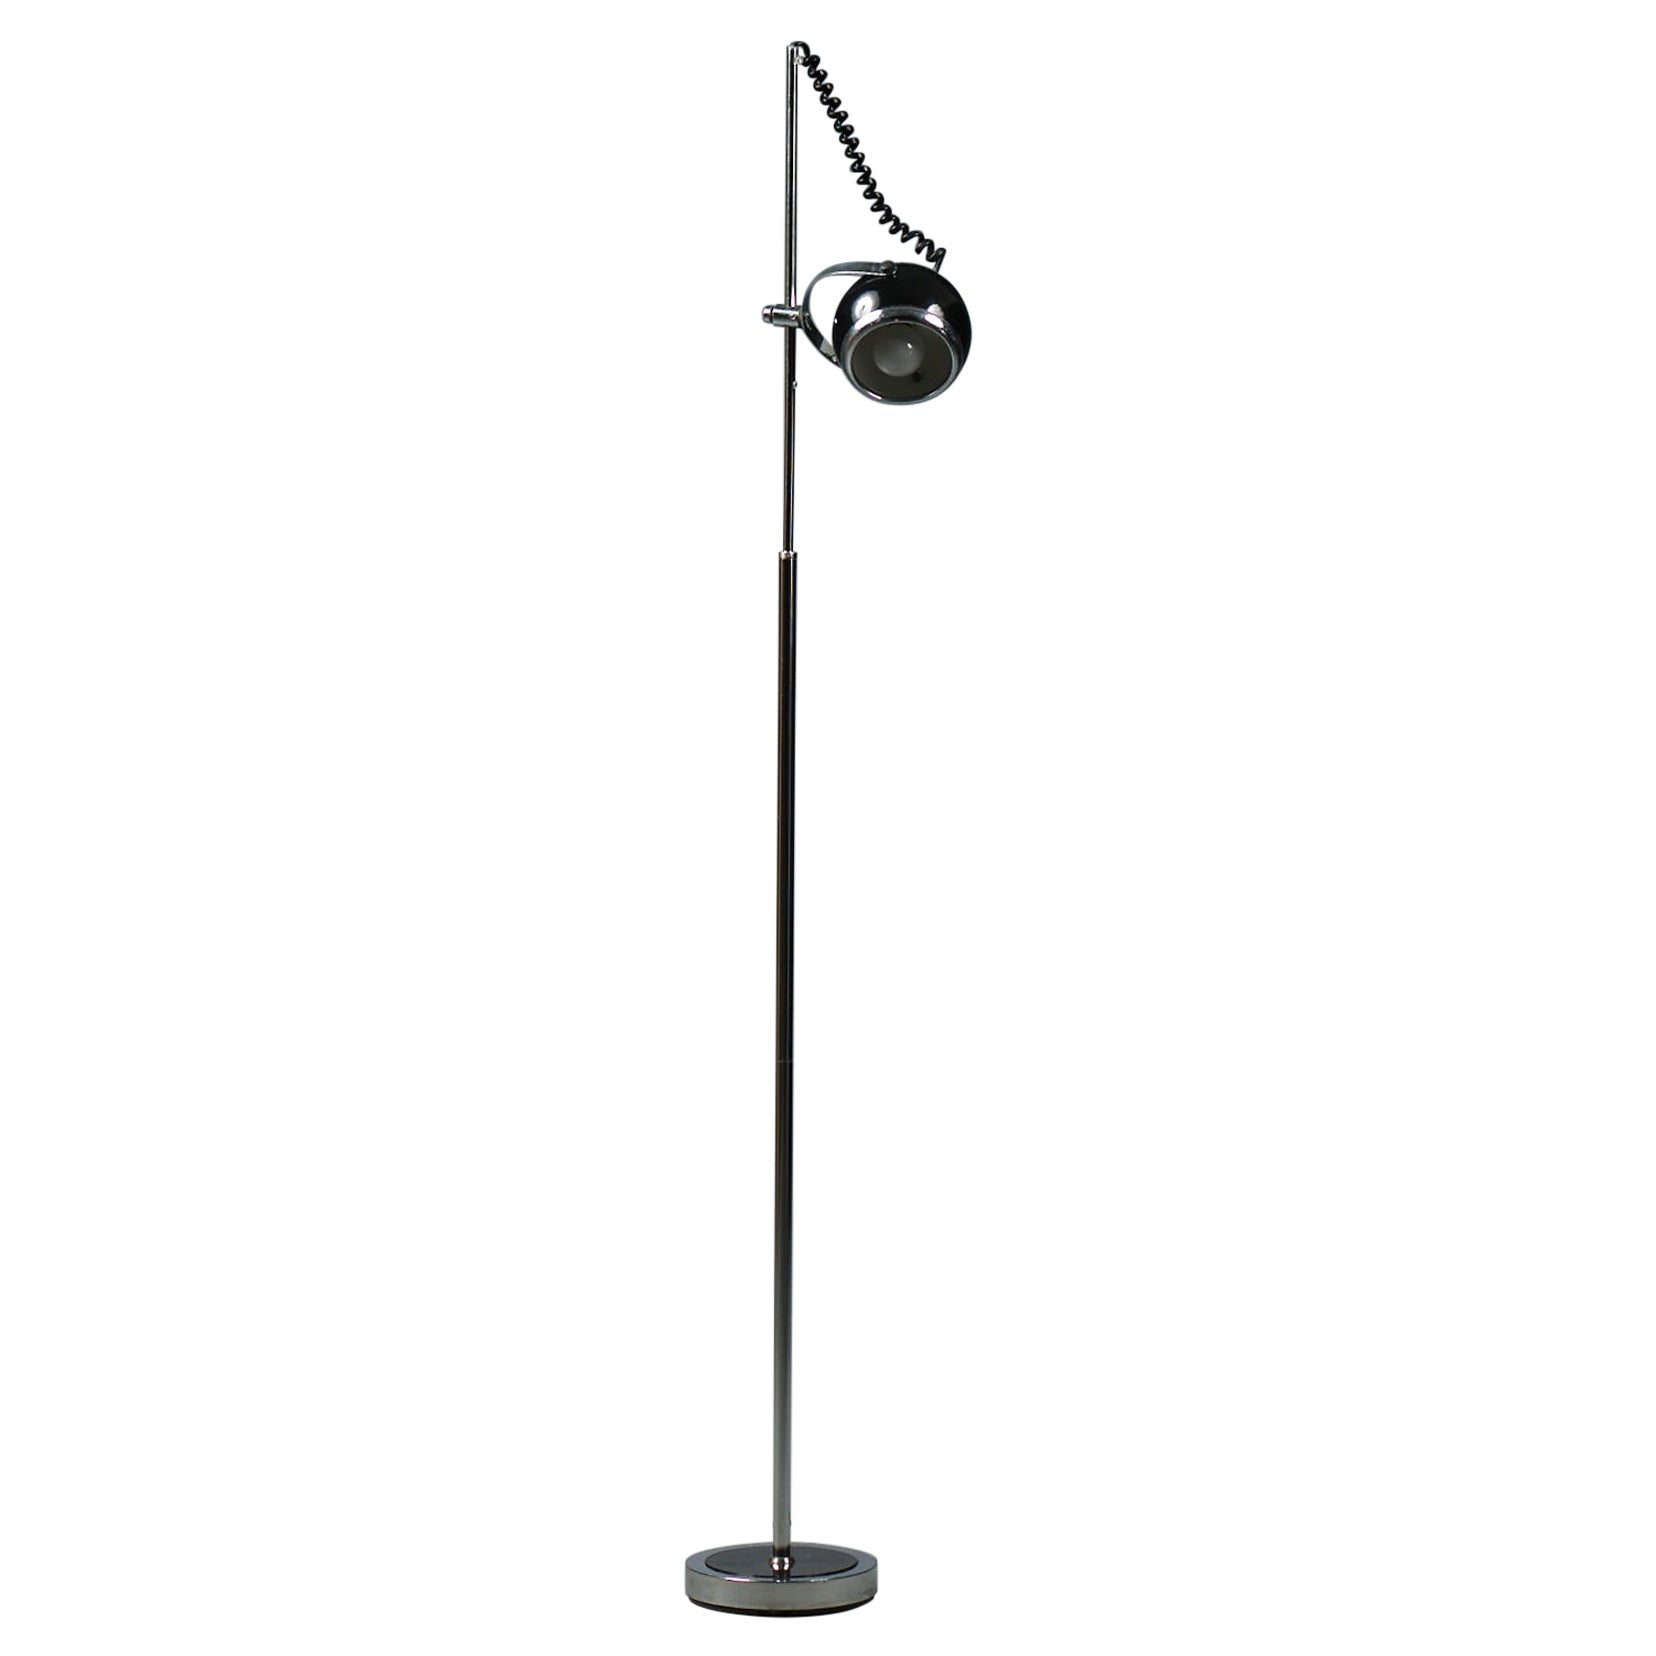 1970s Italian Floor Lamp: Chrome Steel with Adjustable Spherical Diffuser